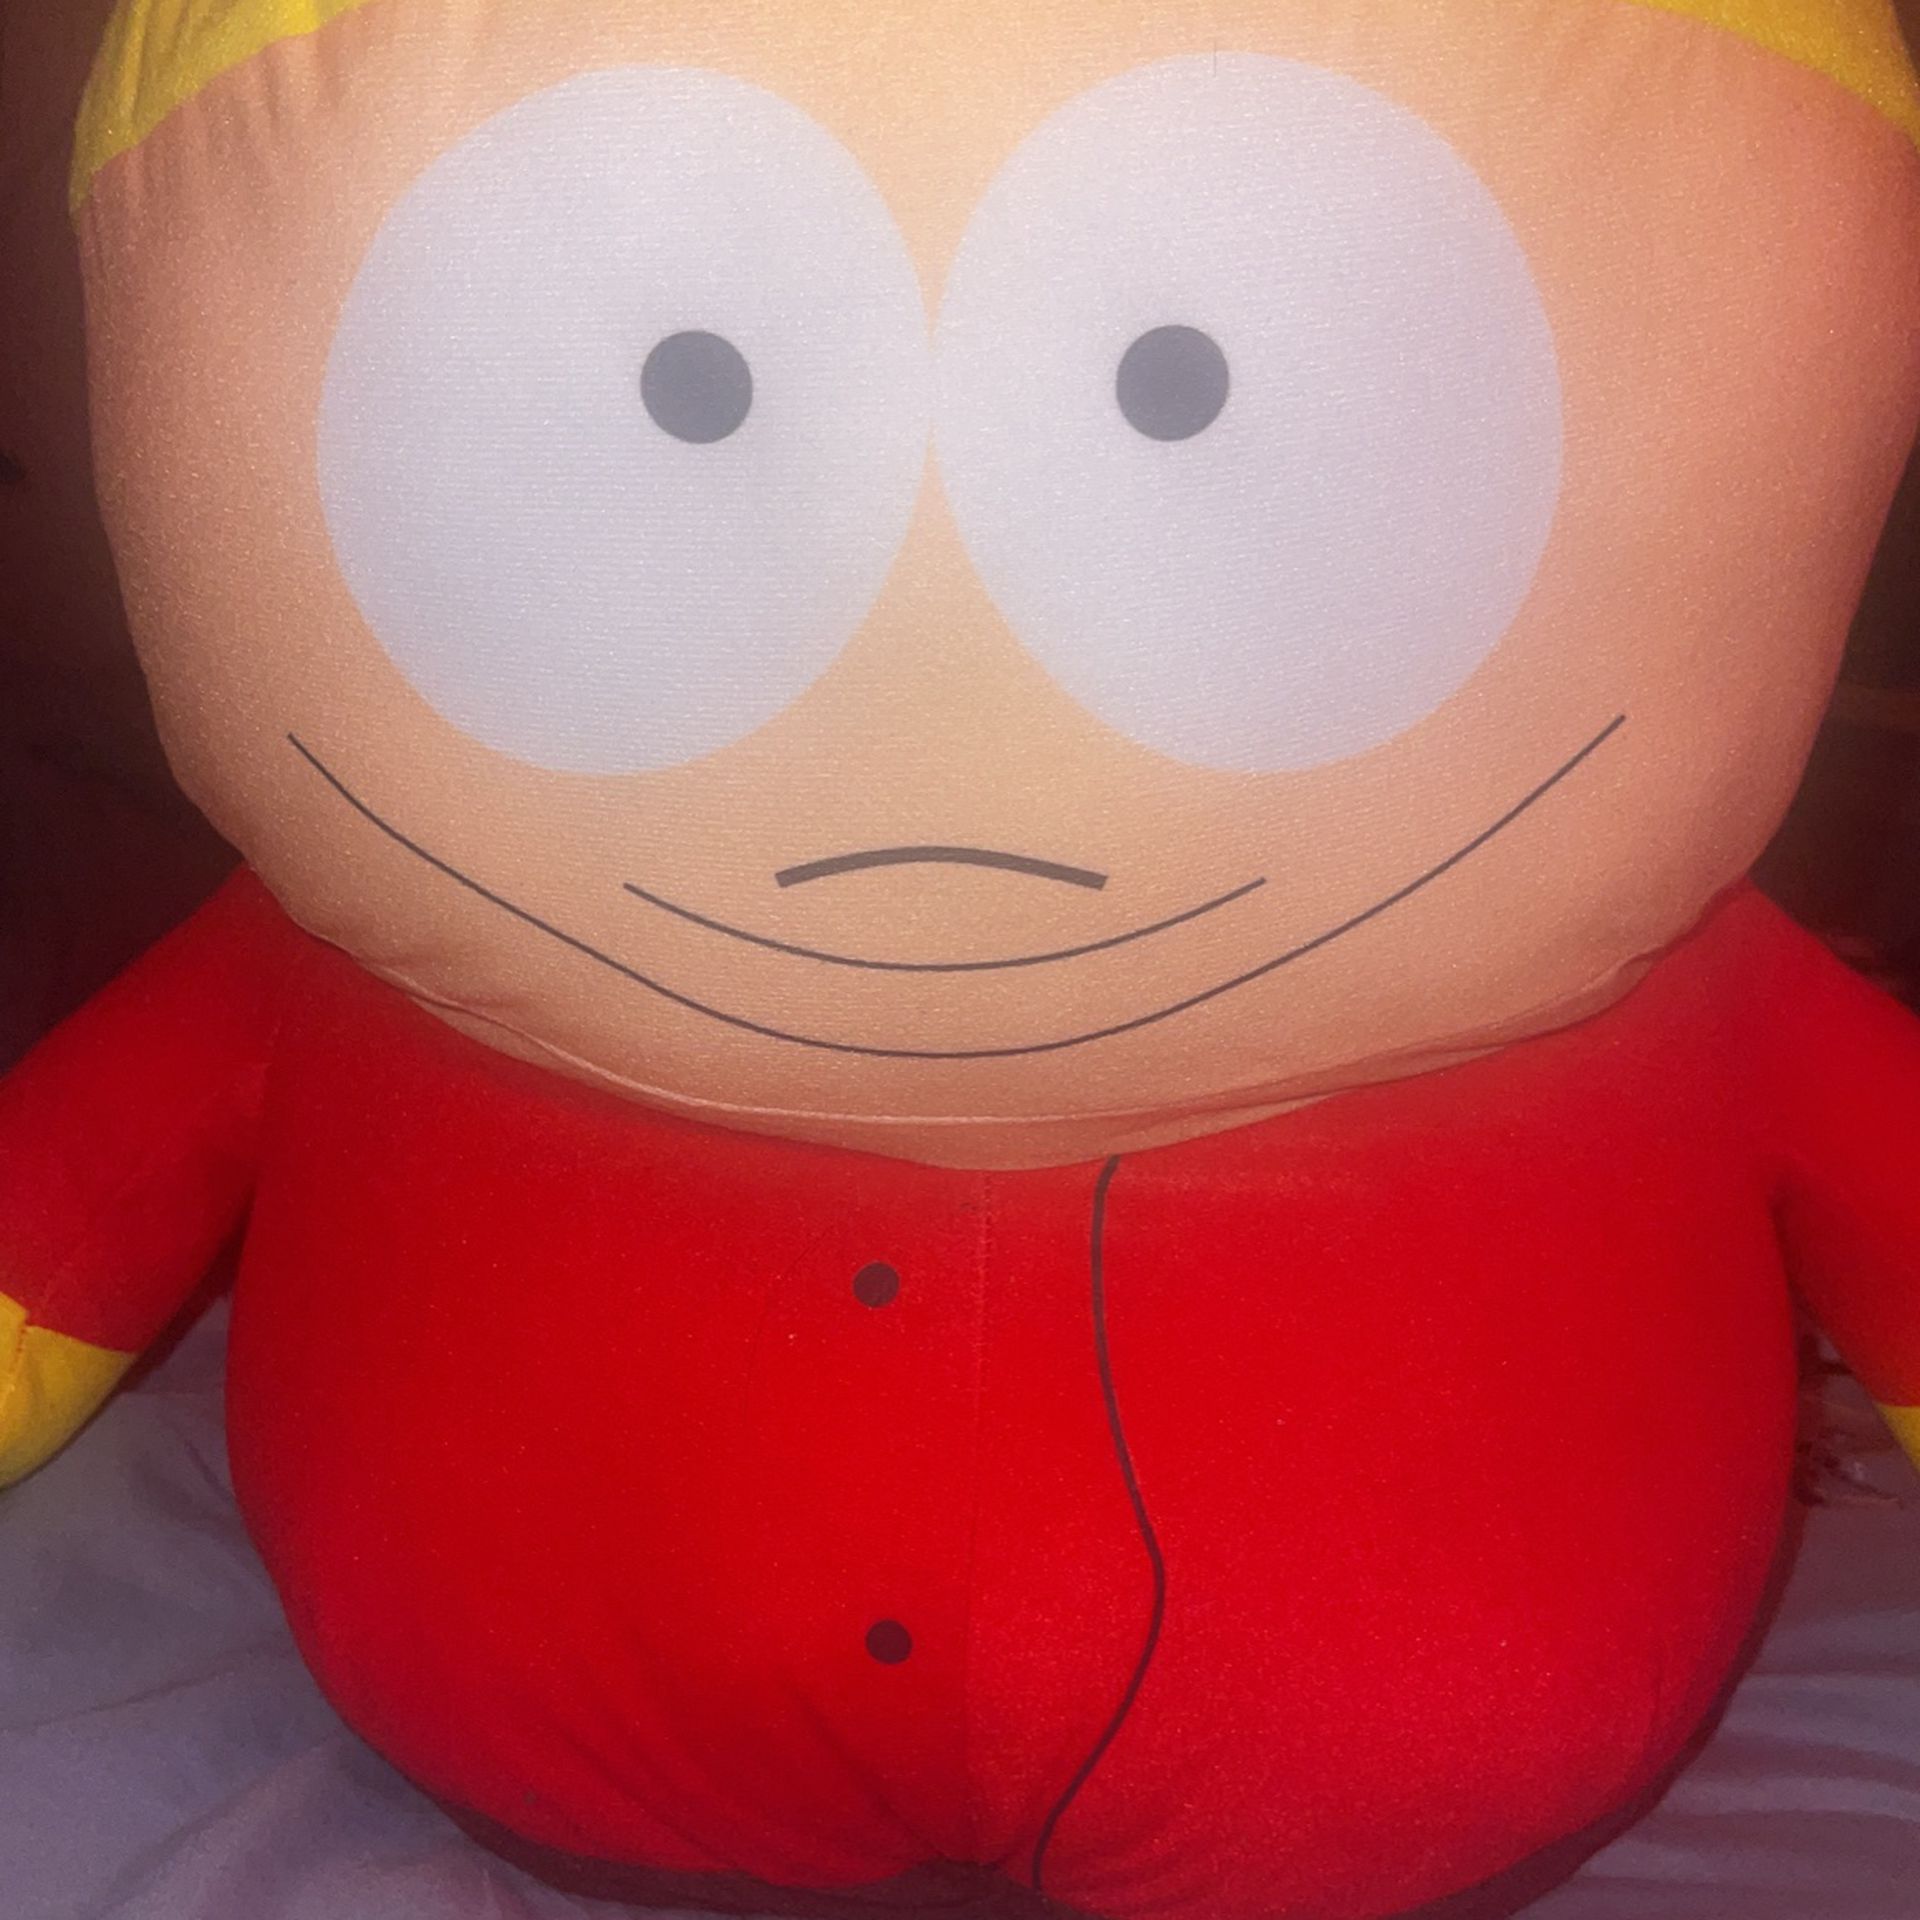 South Park cartman plush 18”